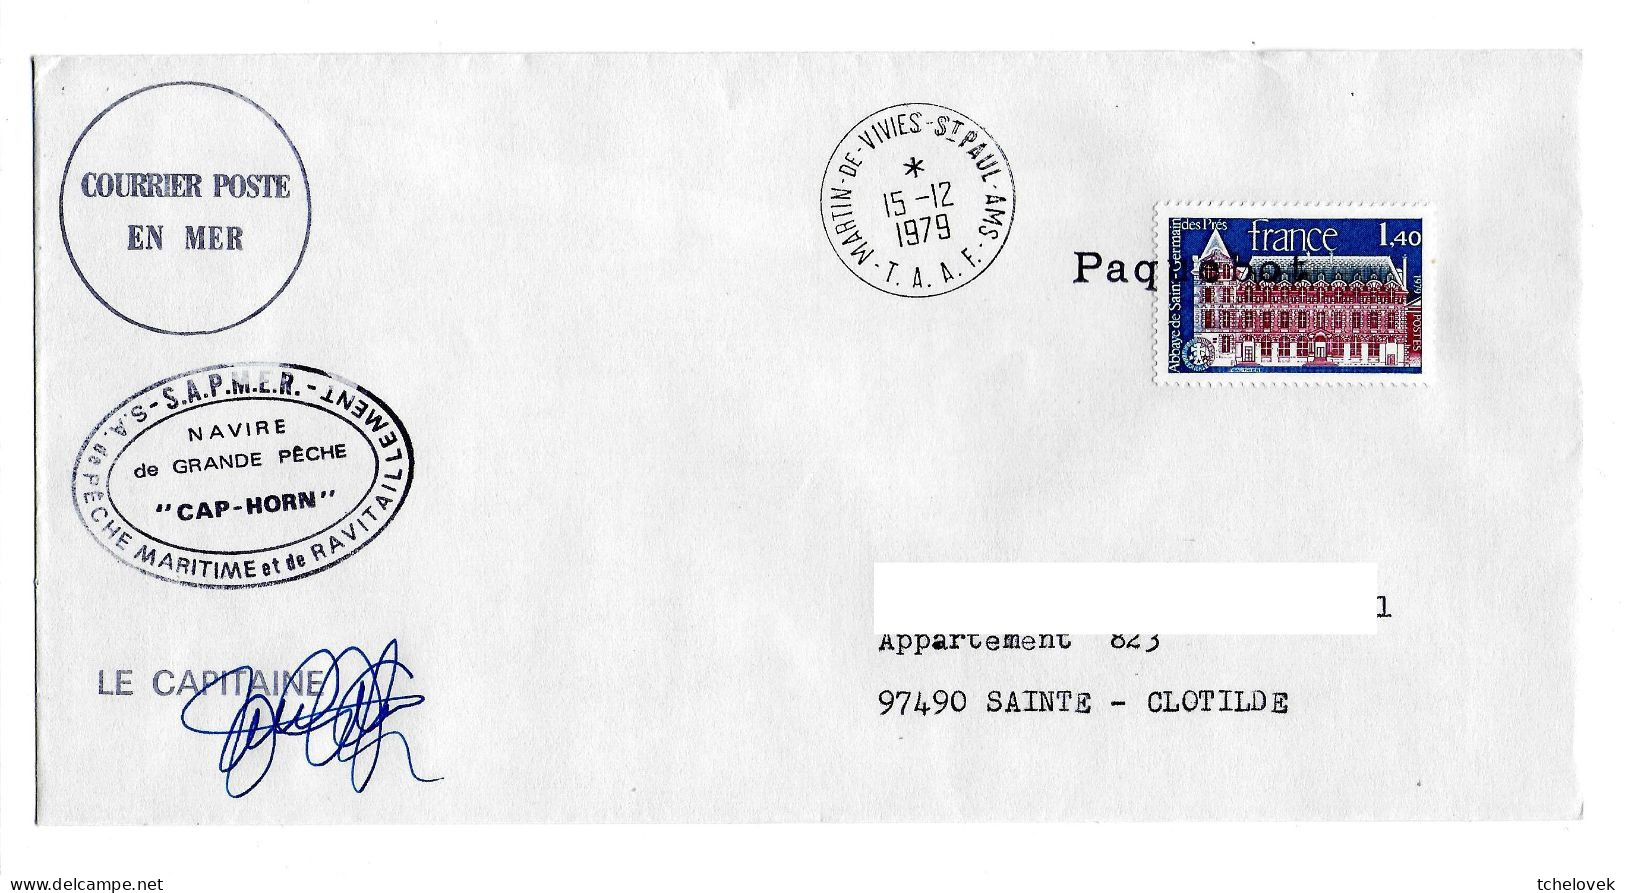 FSAT TAAF Cap Horn Sapmer 15.12.1979 SPA T. France 1.40 St Germain Des Pres (1) - Storia Postale